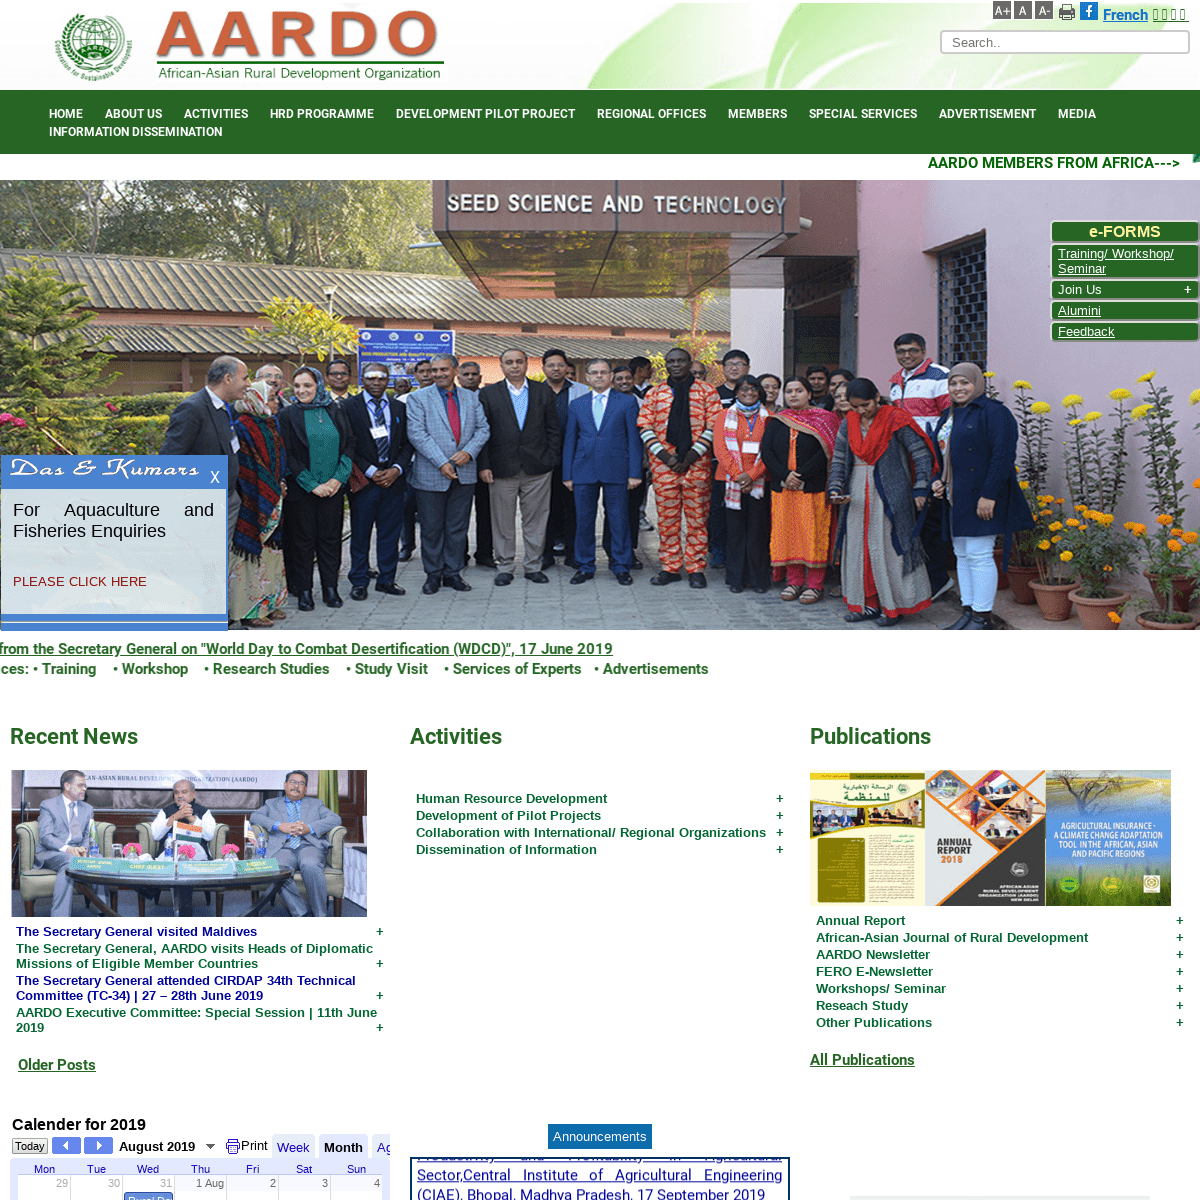 African-Asian Rural Development Organization